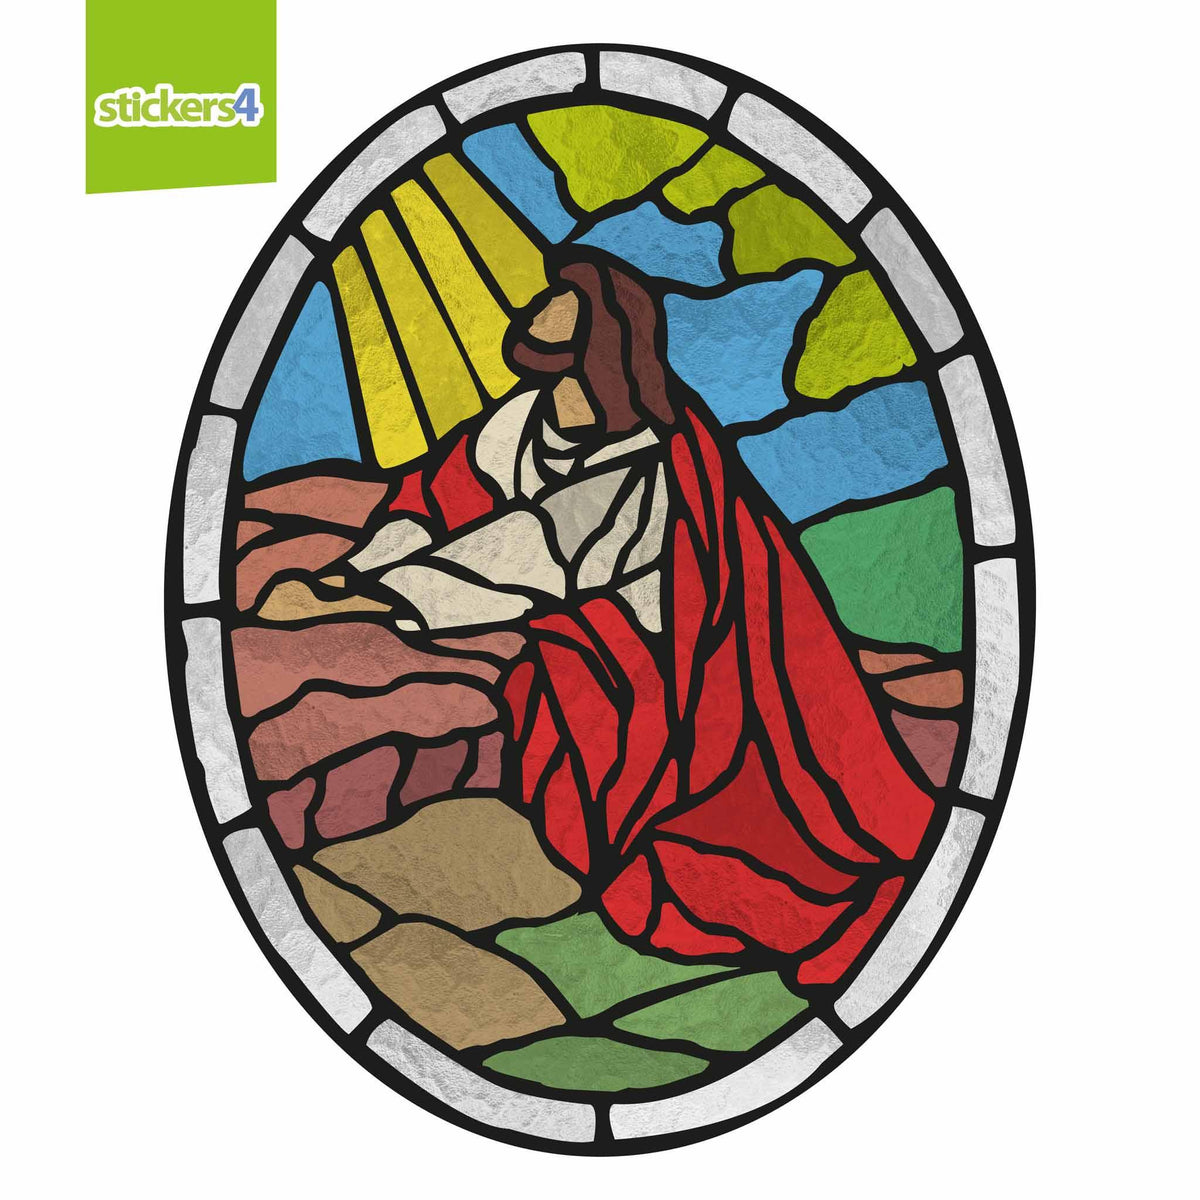 He Is Risen Stained Glass Effect Window Sticker- Easter Window Cling